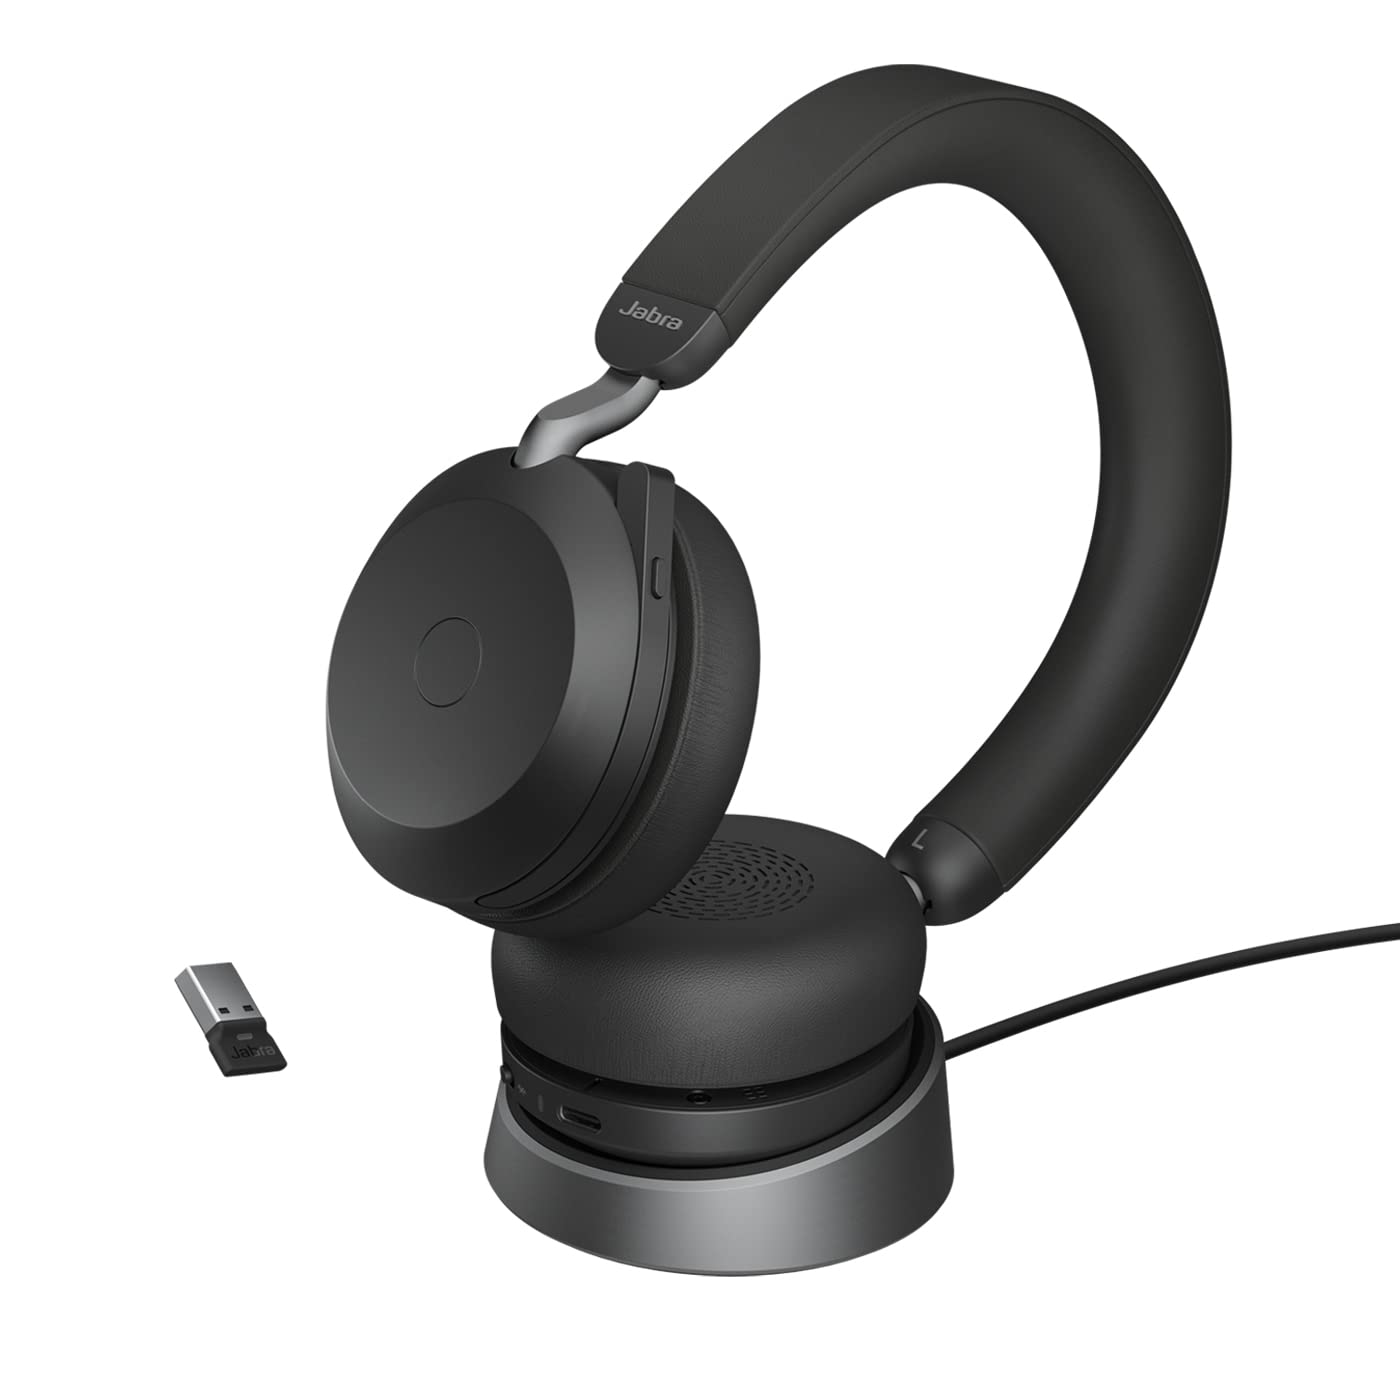 Evolve2 75 USB C MS Wireless Headset